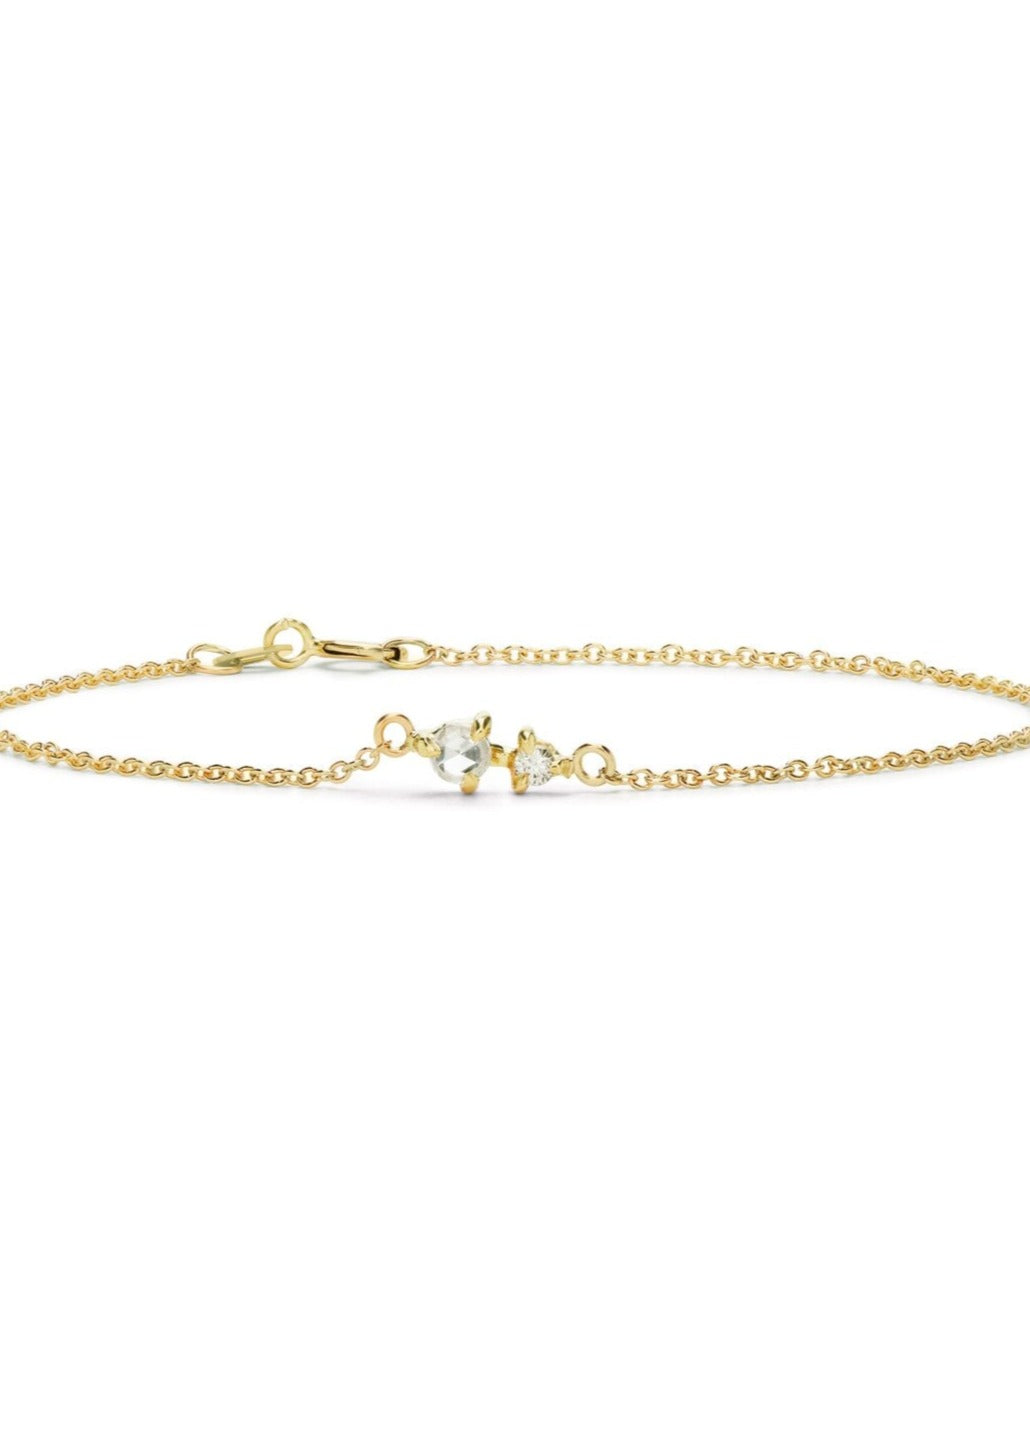 Sloane Bracelet // Gold and Diamond